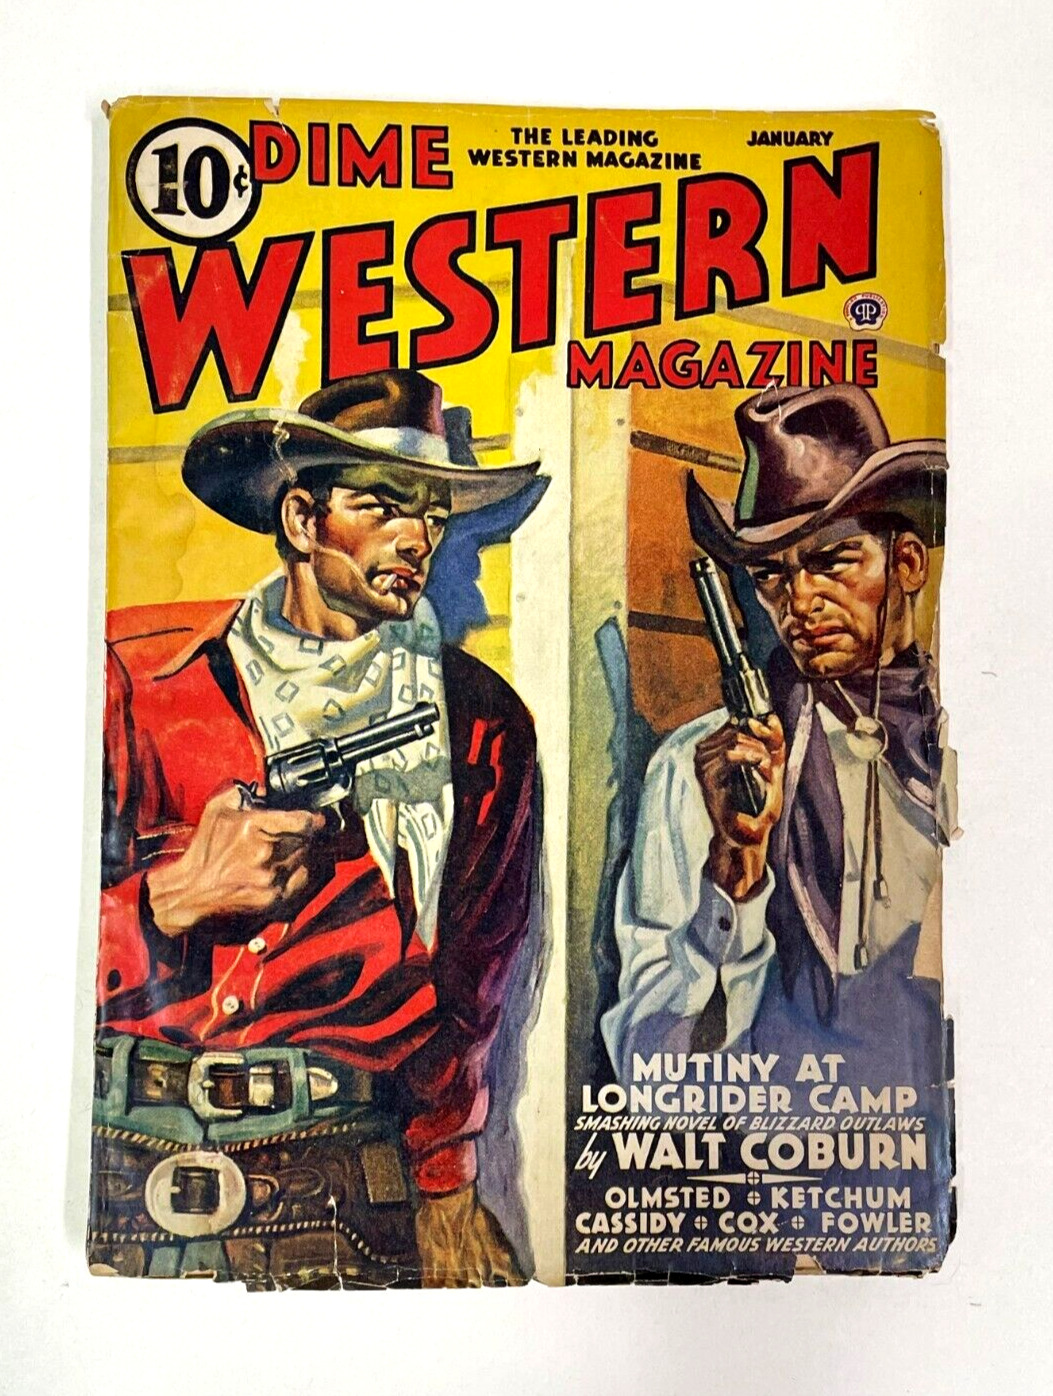 VINTAGE Dime Western Magazine Pulp Jan 1941 Vol. 29 #1, G/VG complete.